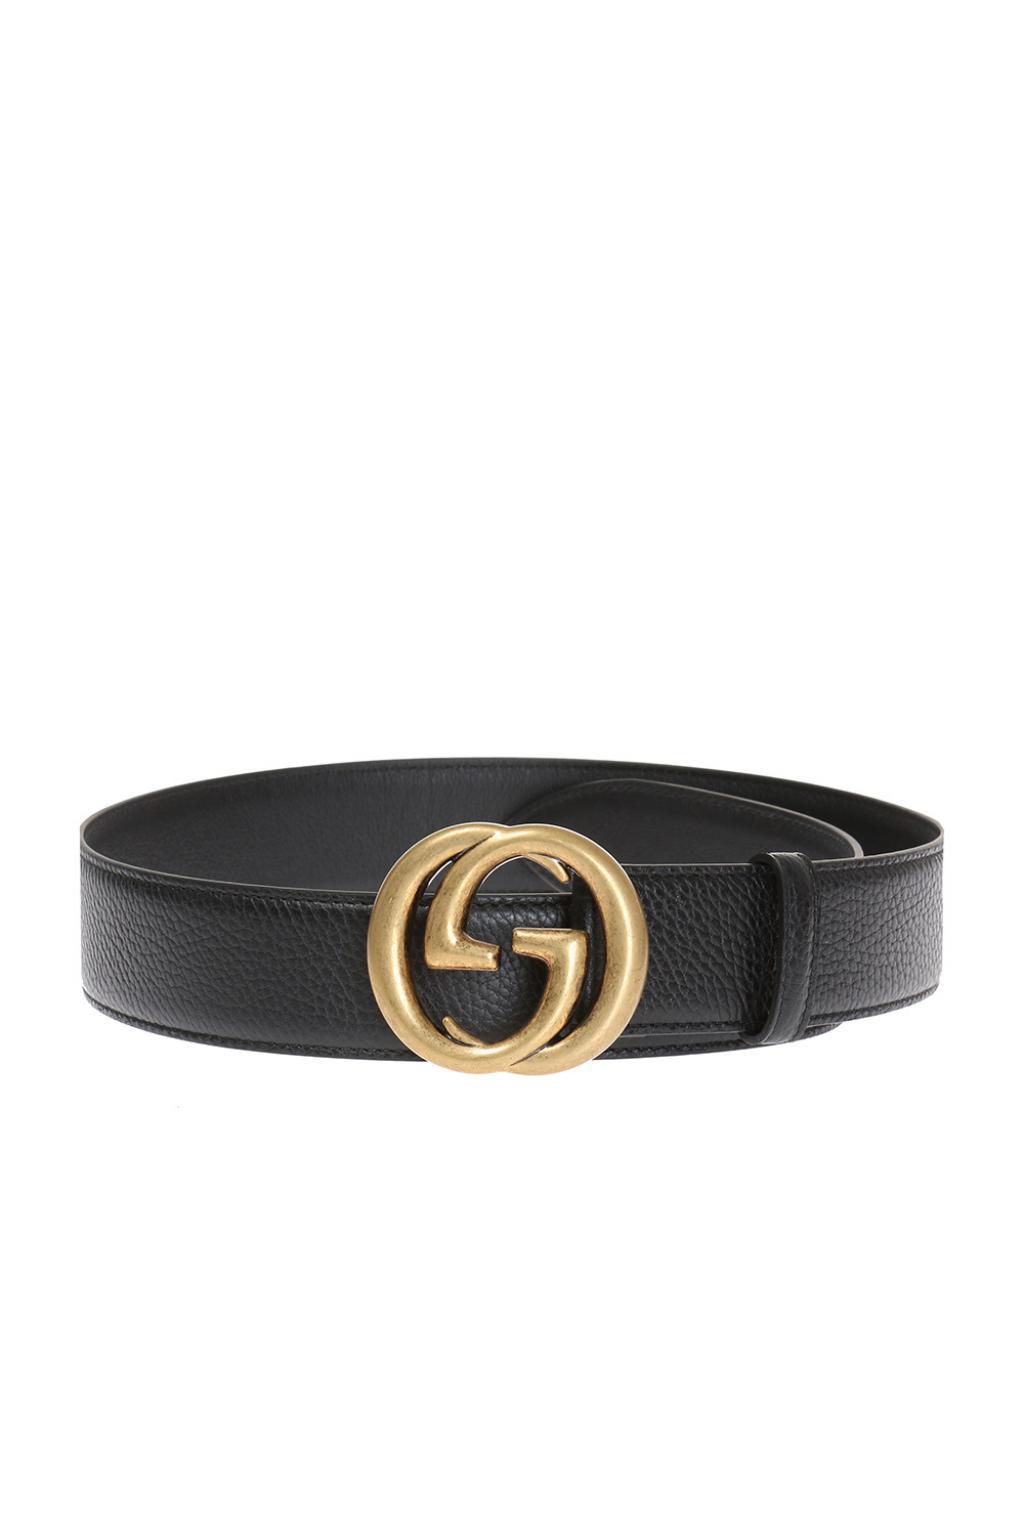 Gucci Leather Logo Buckle Belt in Black for Men - Lyst